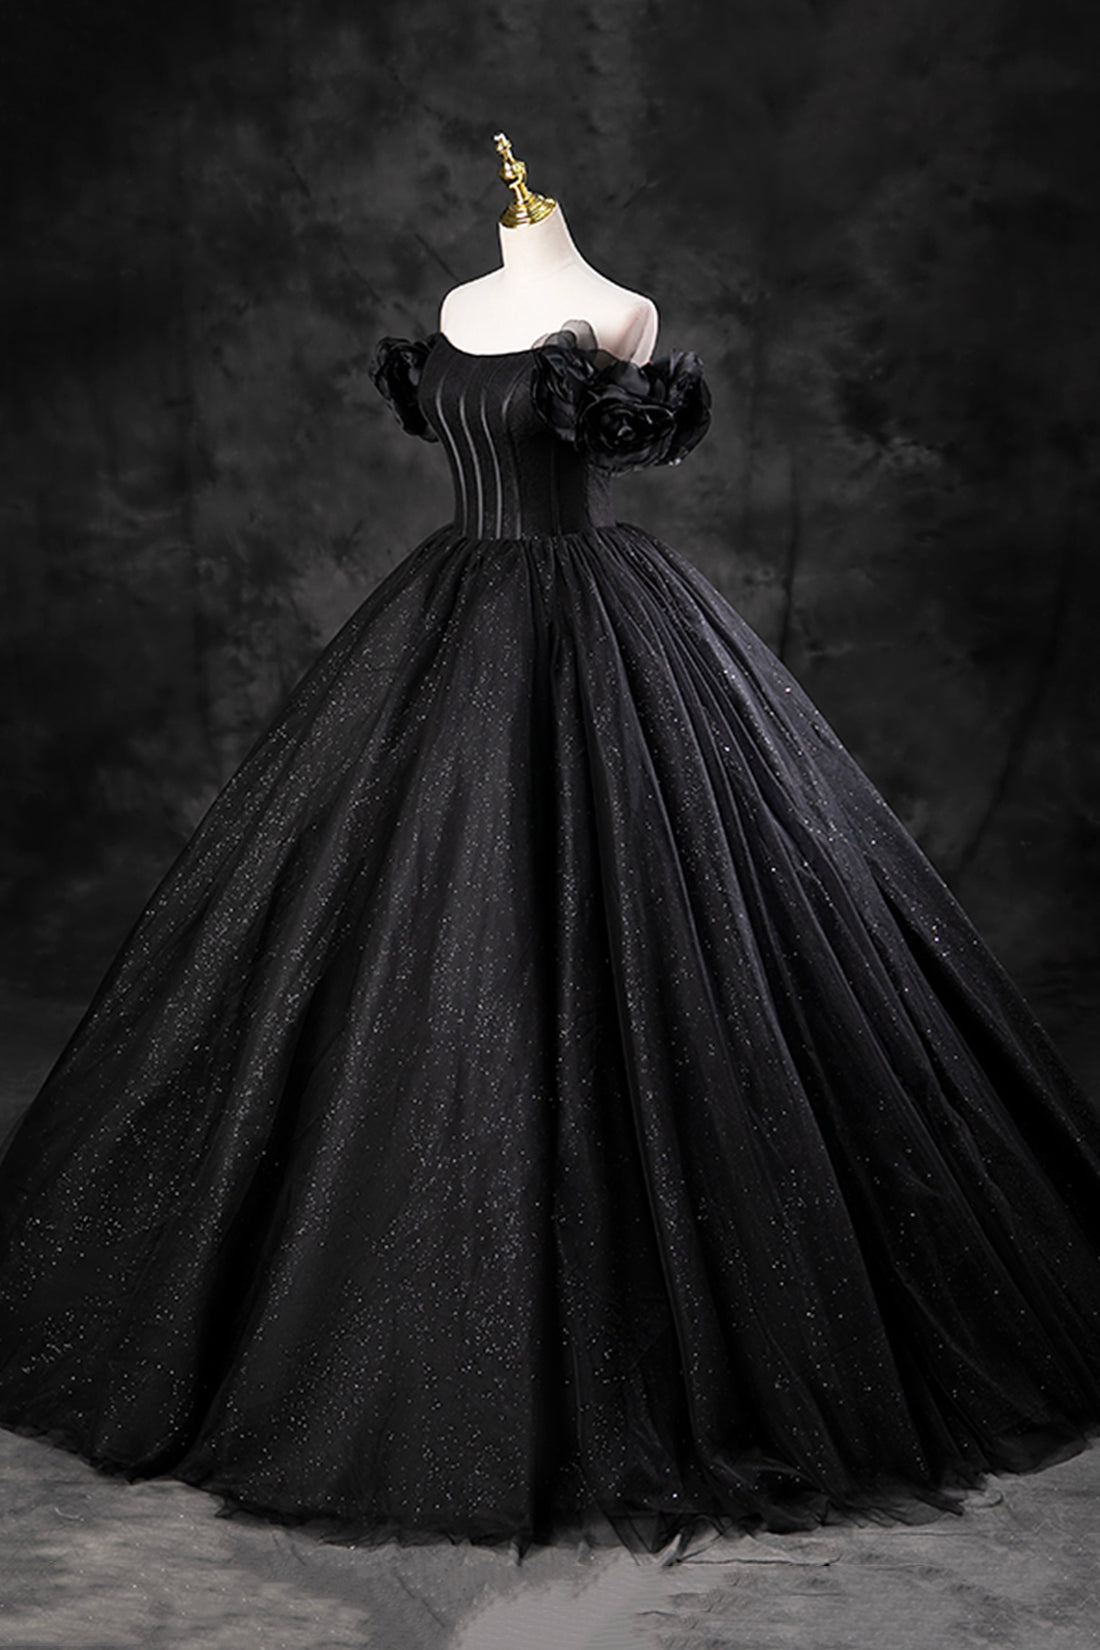 Black Tulle Floor Length A-Line Prom Dress, Off the Shoulder Evening Party Dress